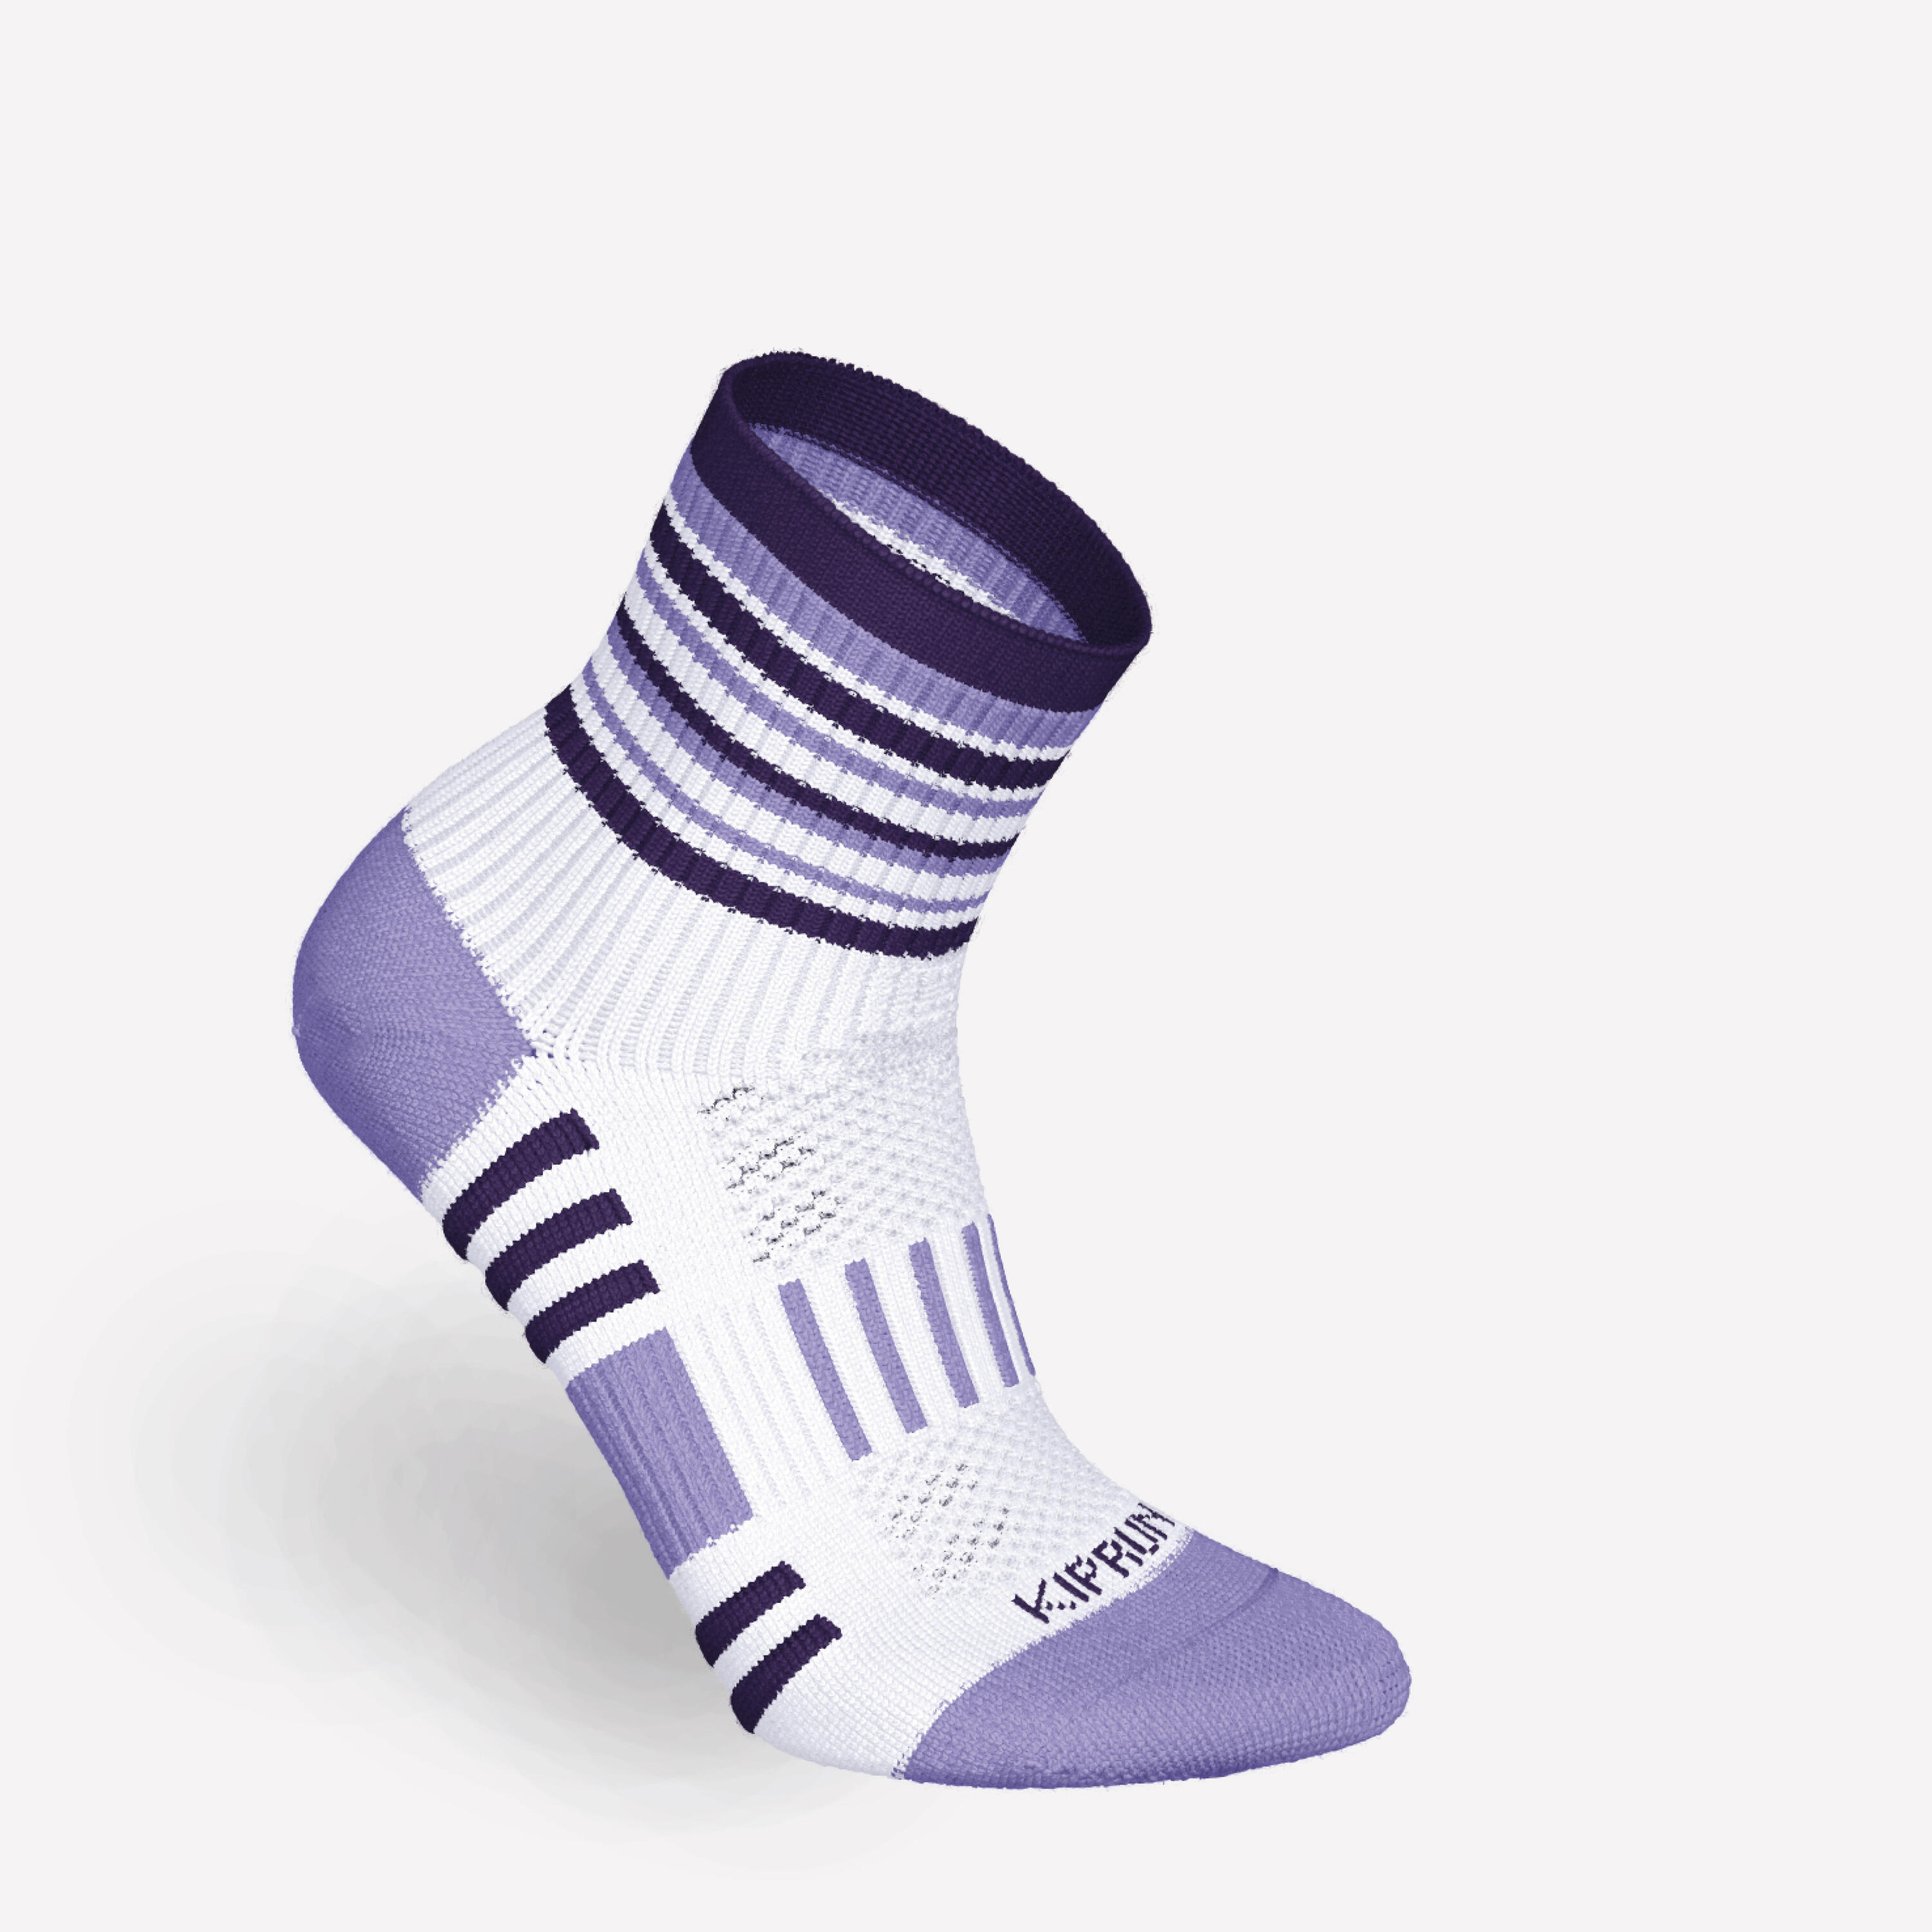 KIPRUN 500 mid kids' comfort running socks 2-pack - striped and plain purple 7/11